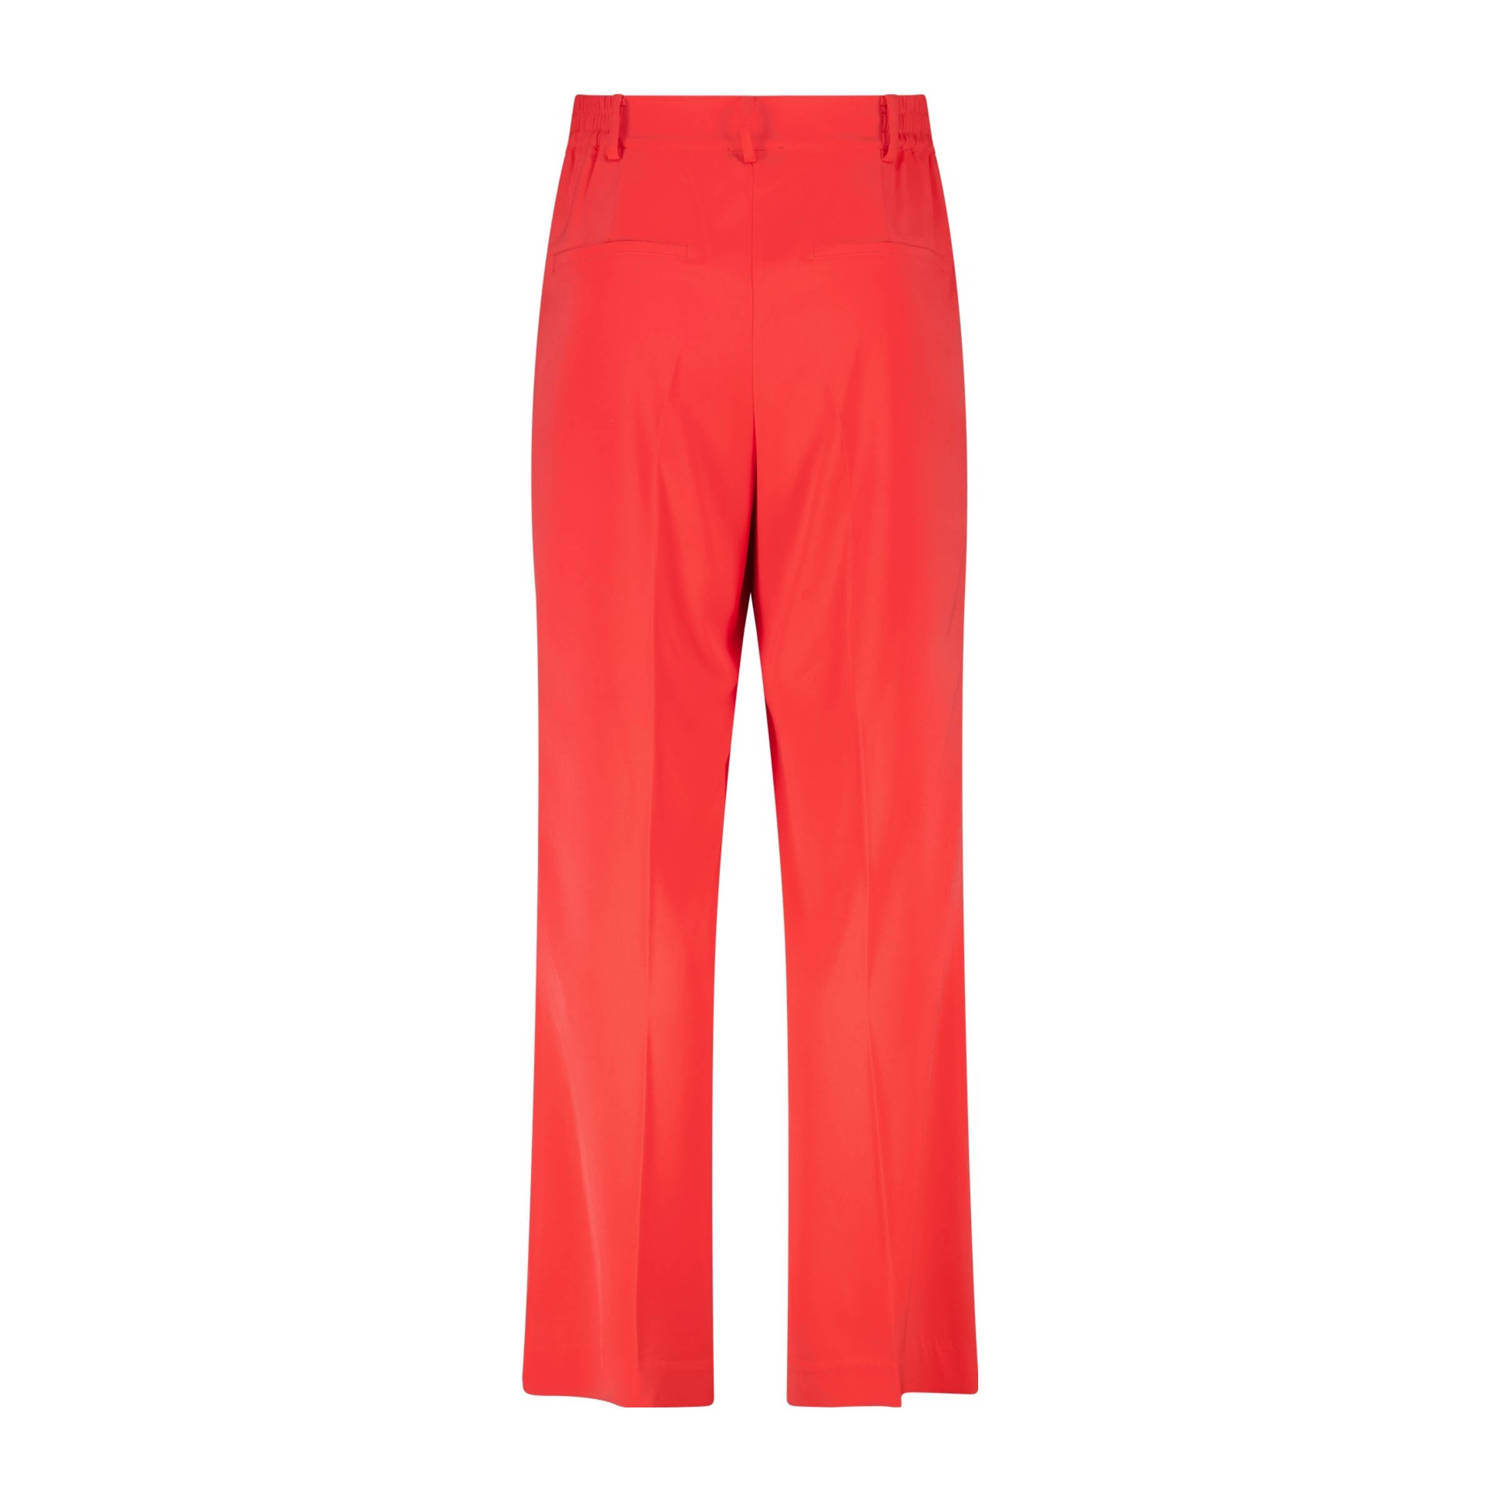 MS Mode high waist straight fit pantalon rood